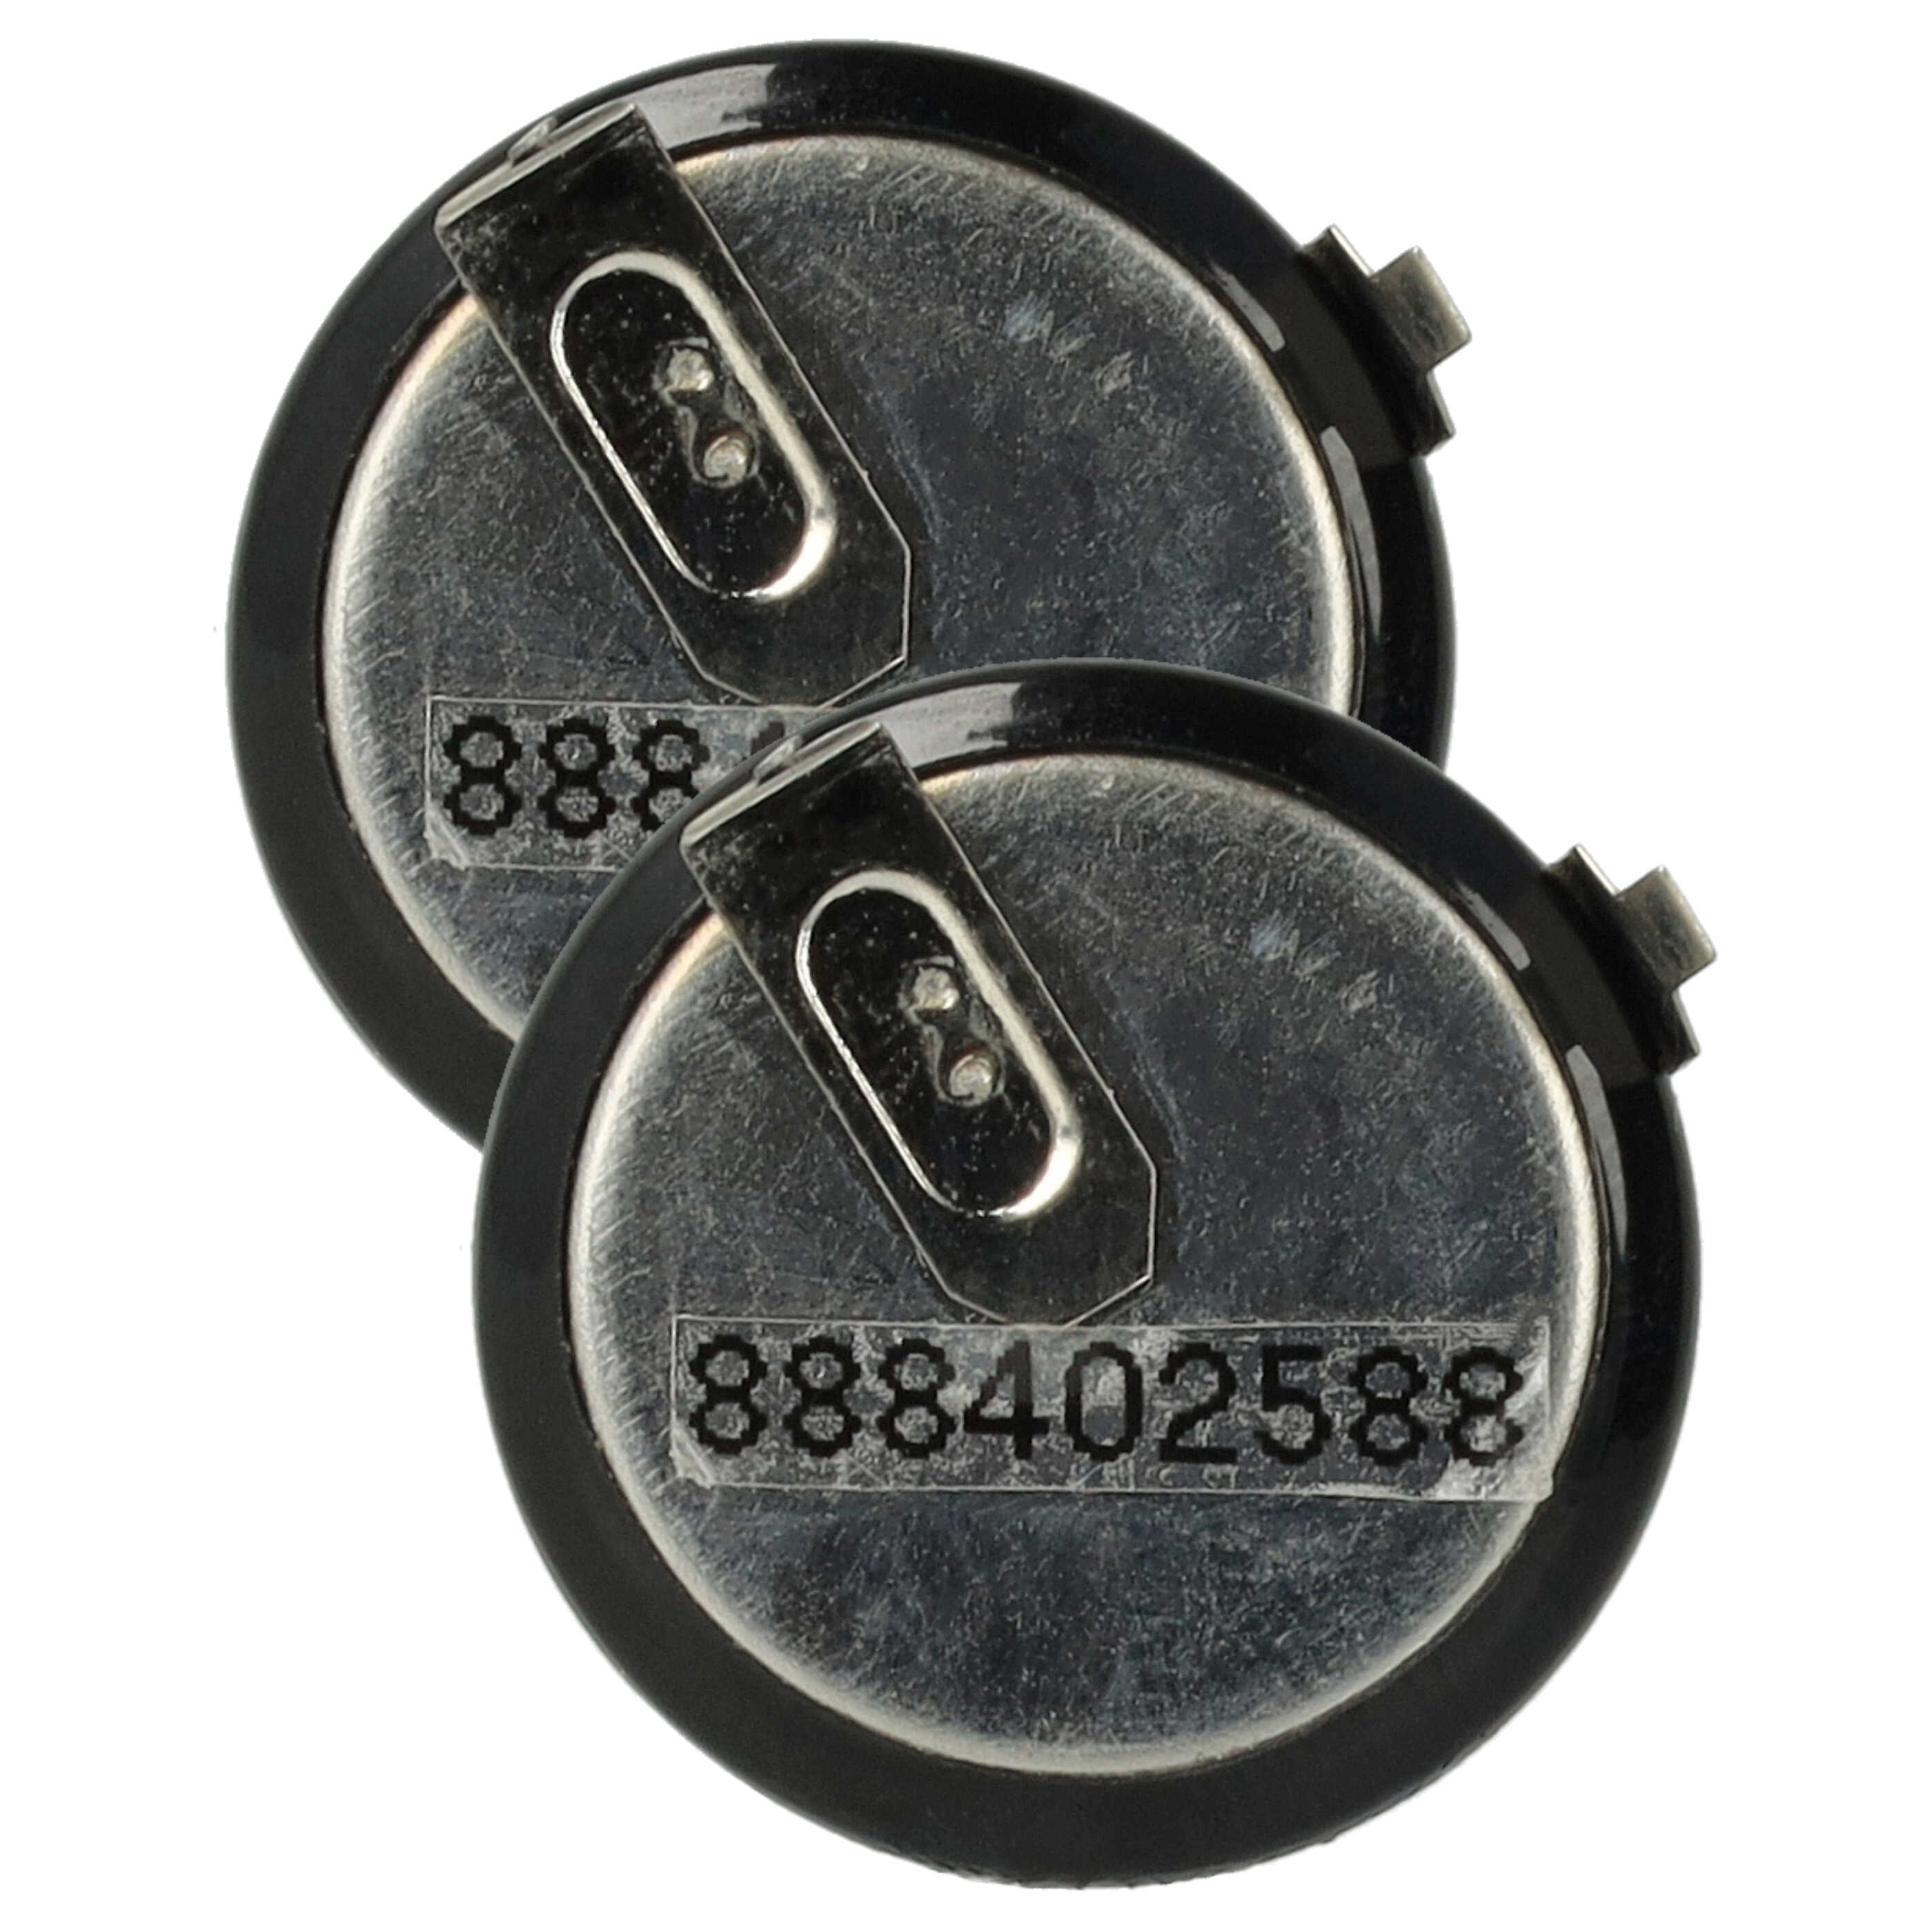 2x Akumulator do kluczyka samochodowego zamiennik VL2020, VL2025, LIR2025 - 20 mAh 3,6 V Li-Ion